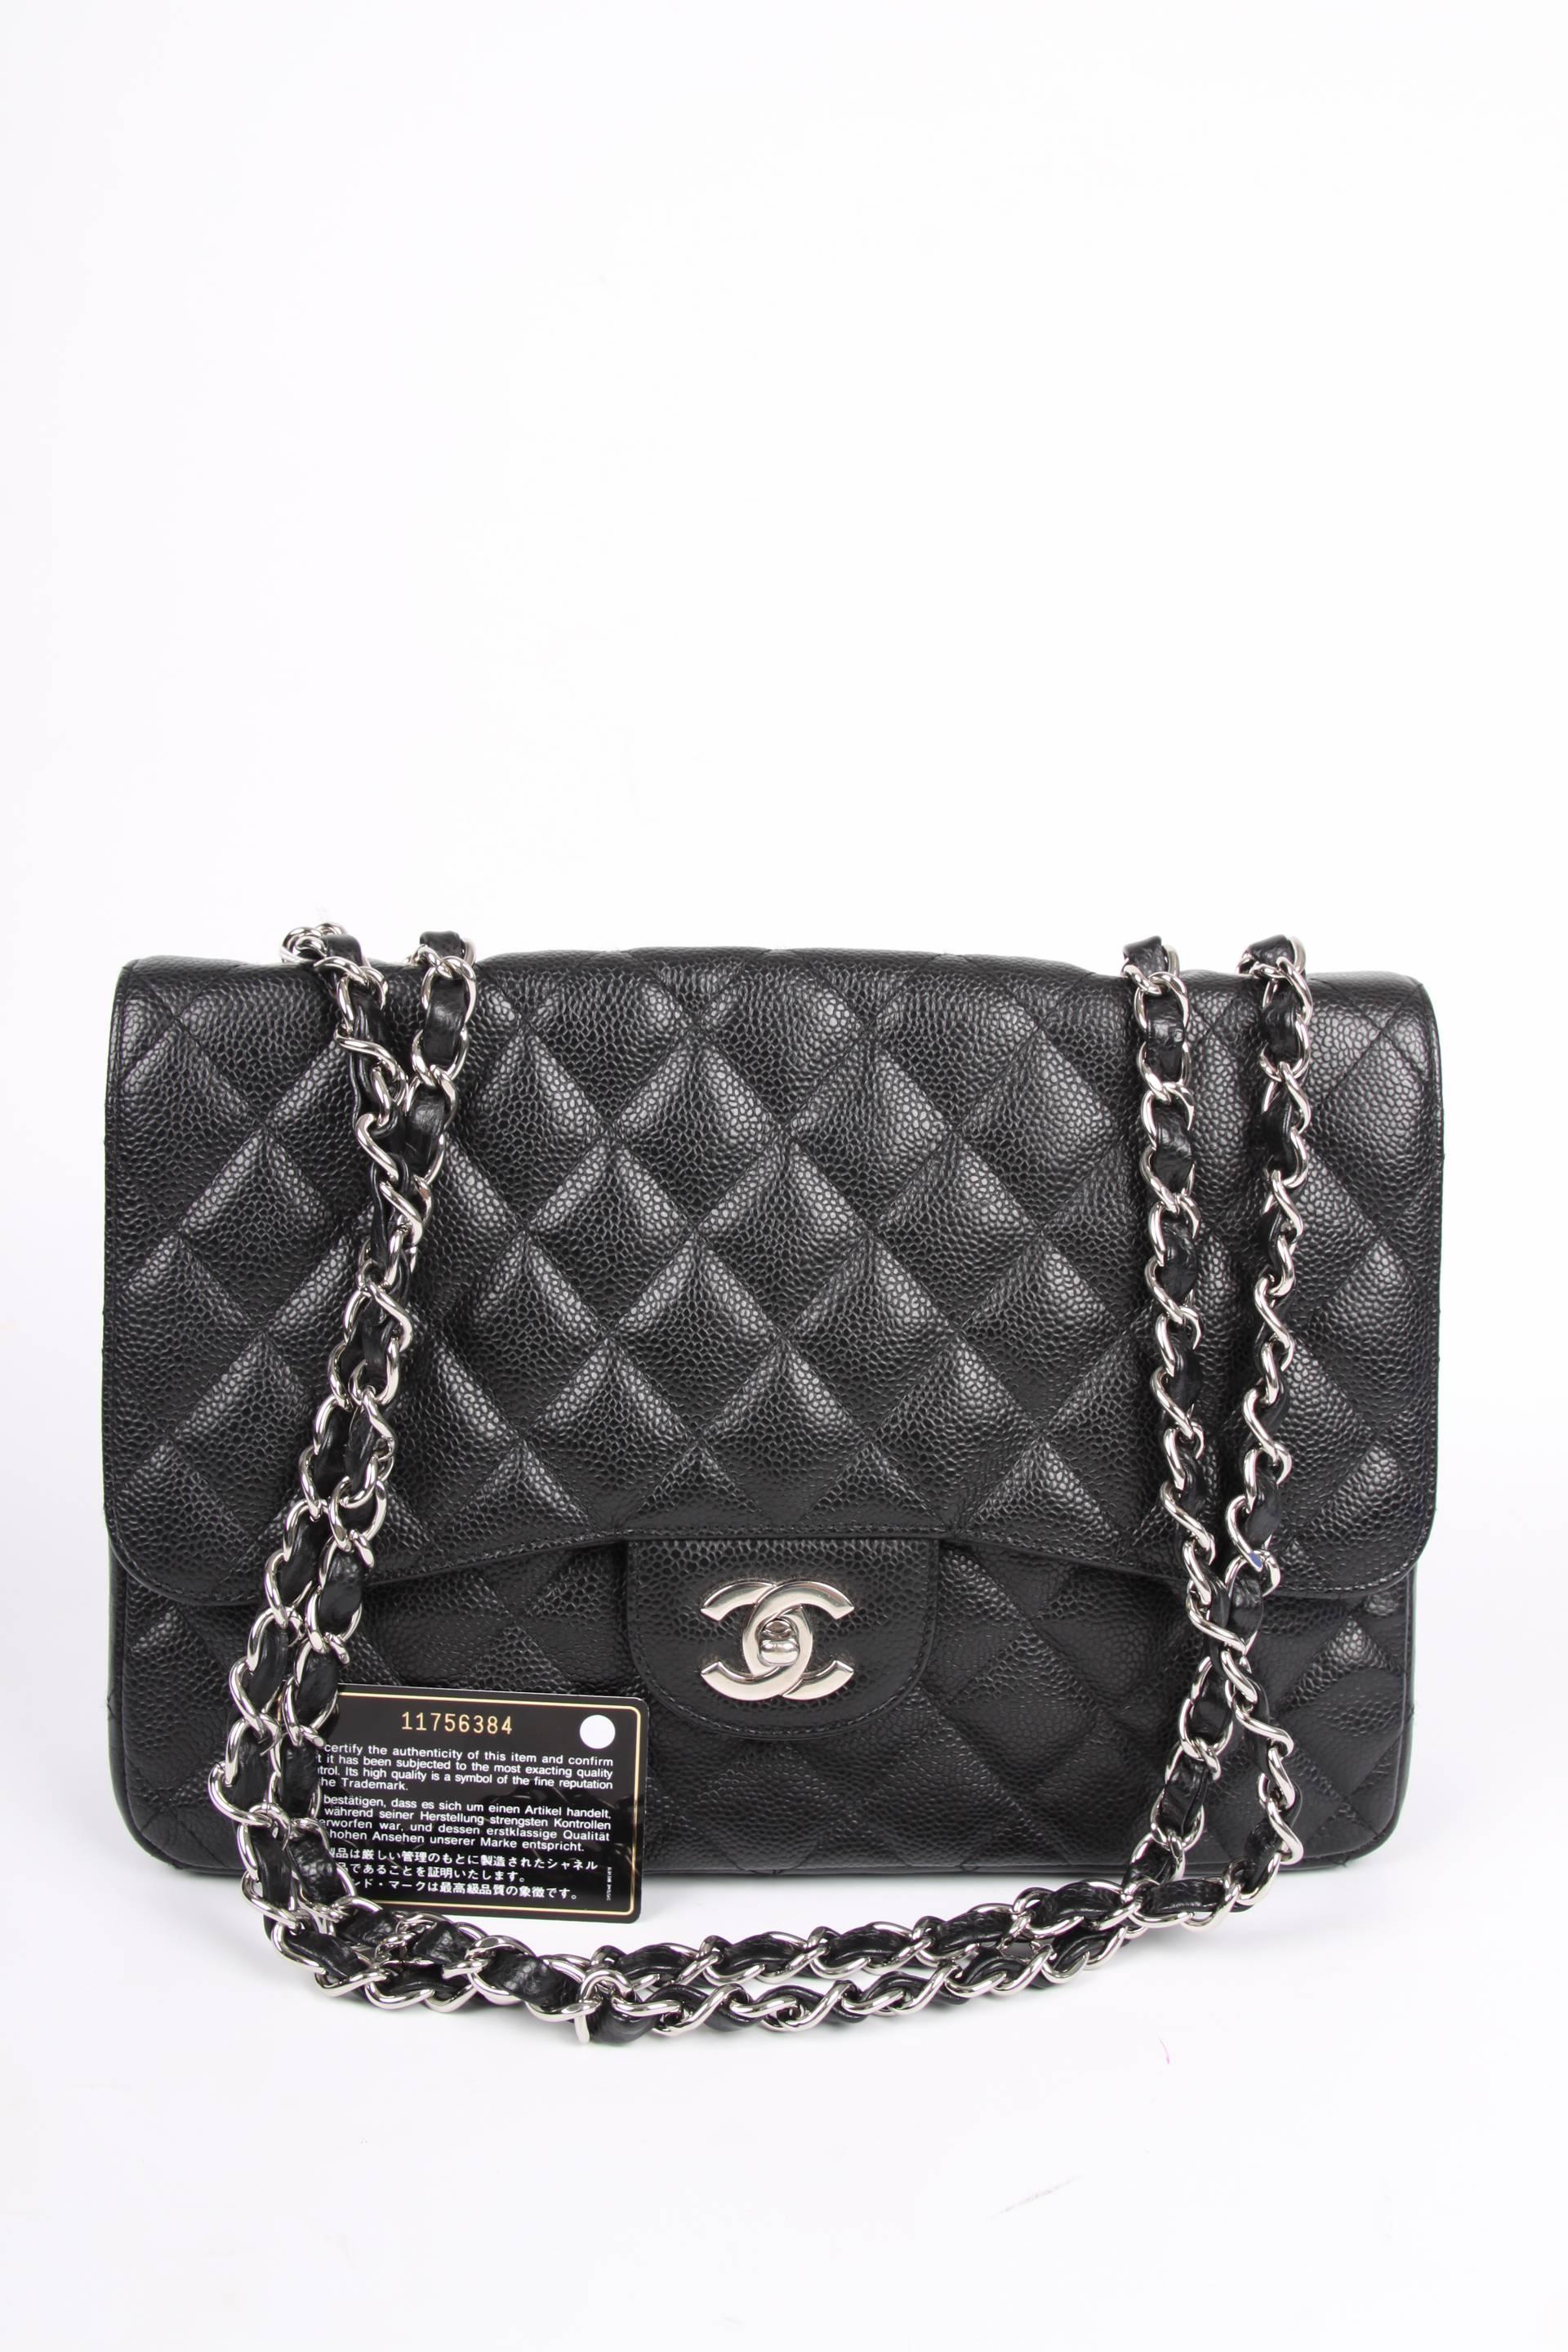 Chanel 2.55 Timeless Jumbo Single Flap Bag - black caviar leather/silver 2